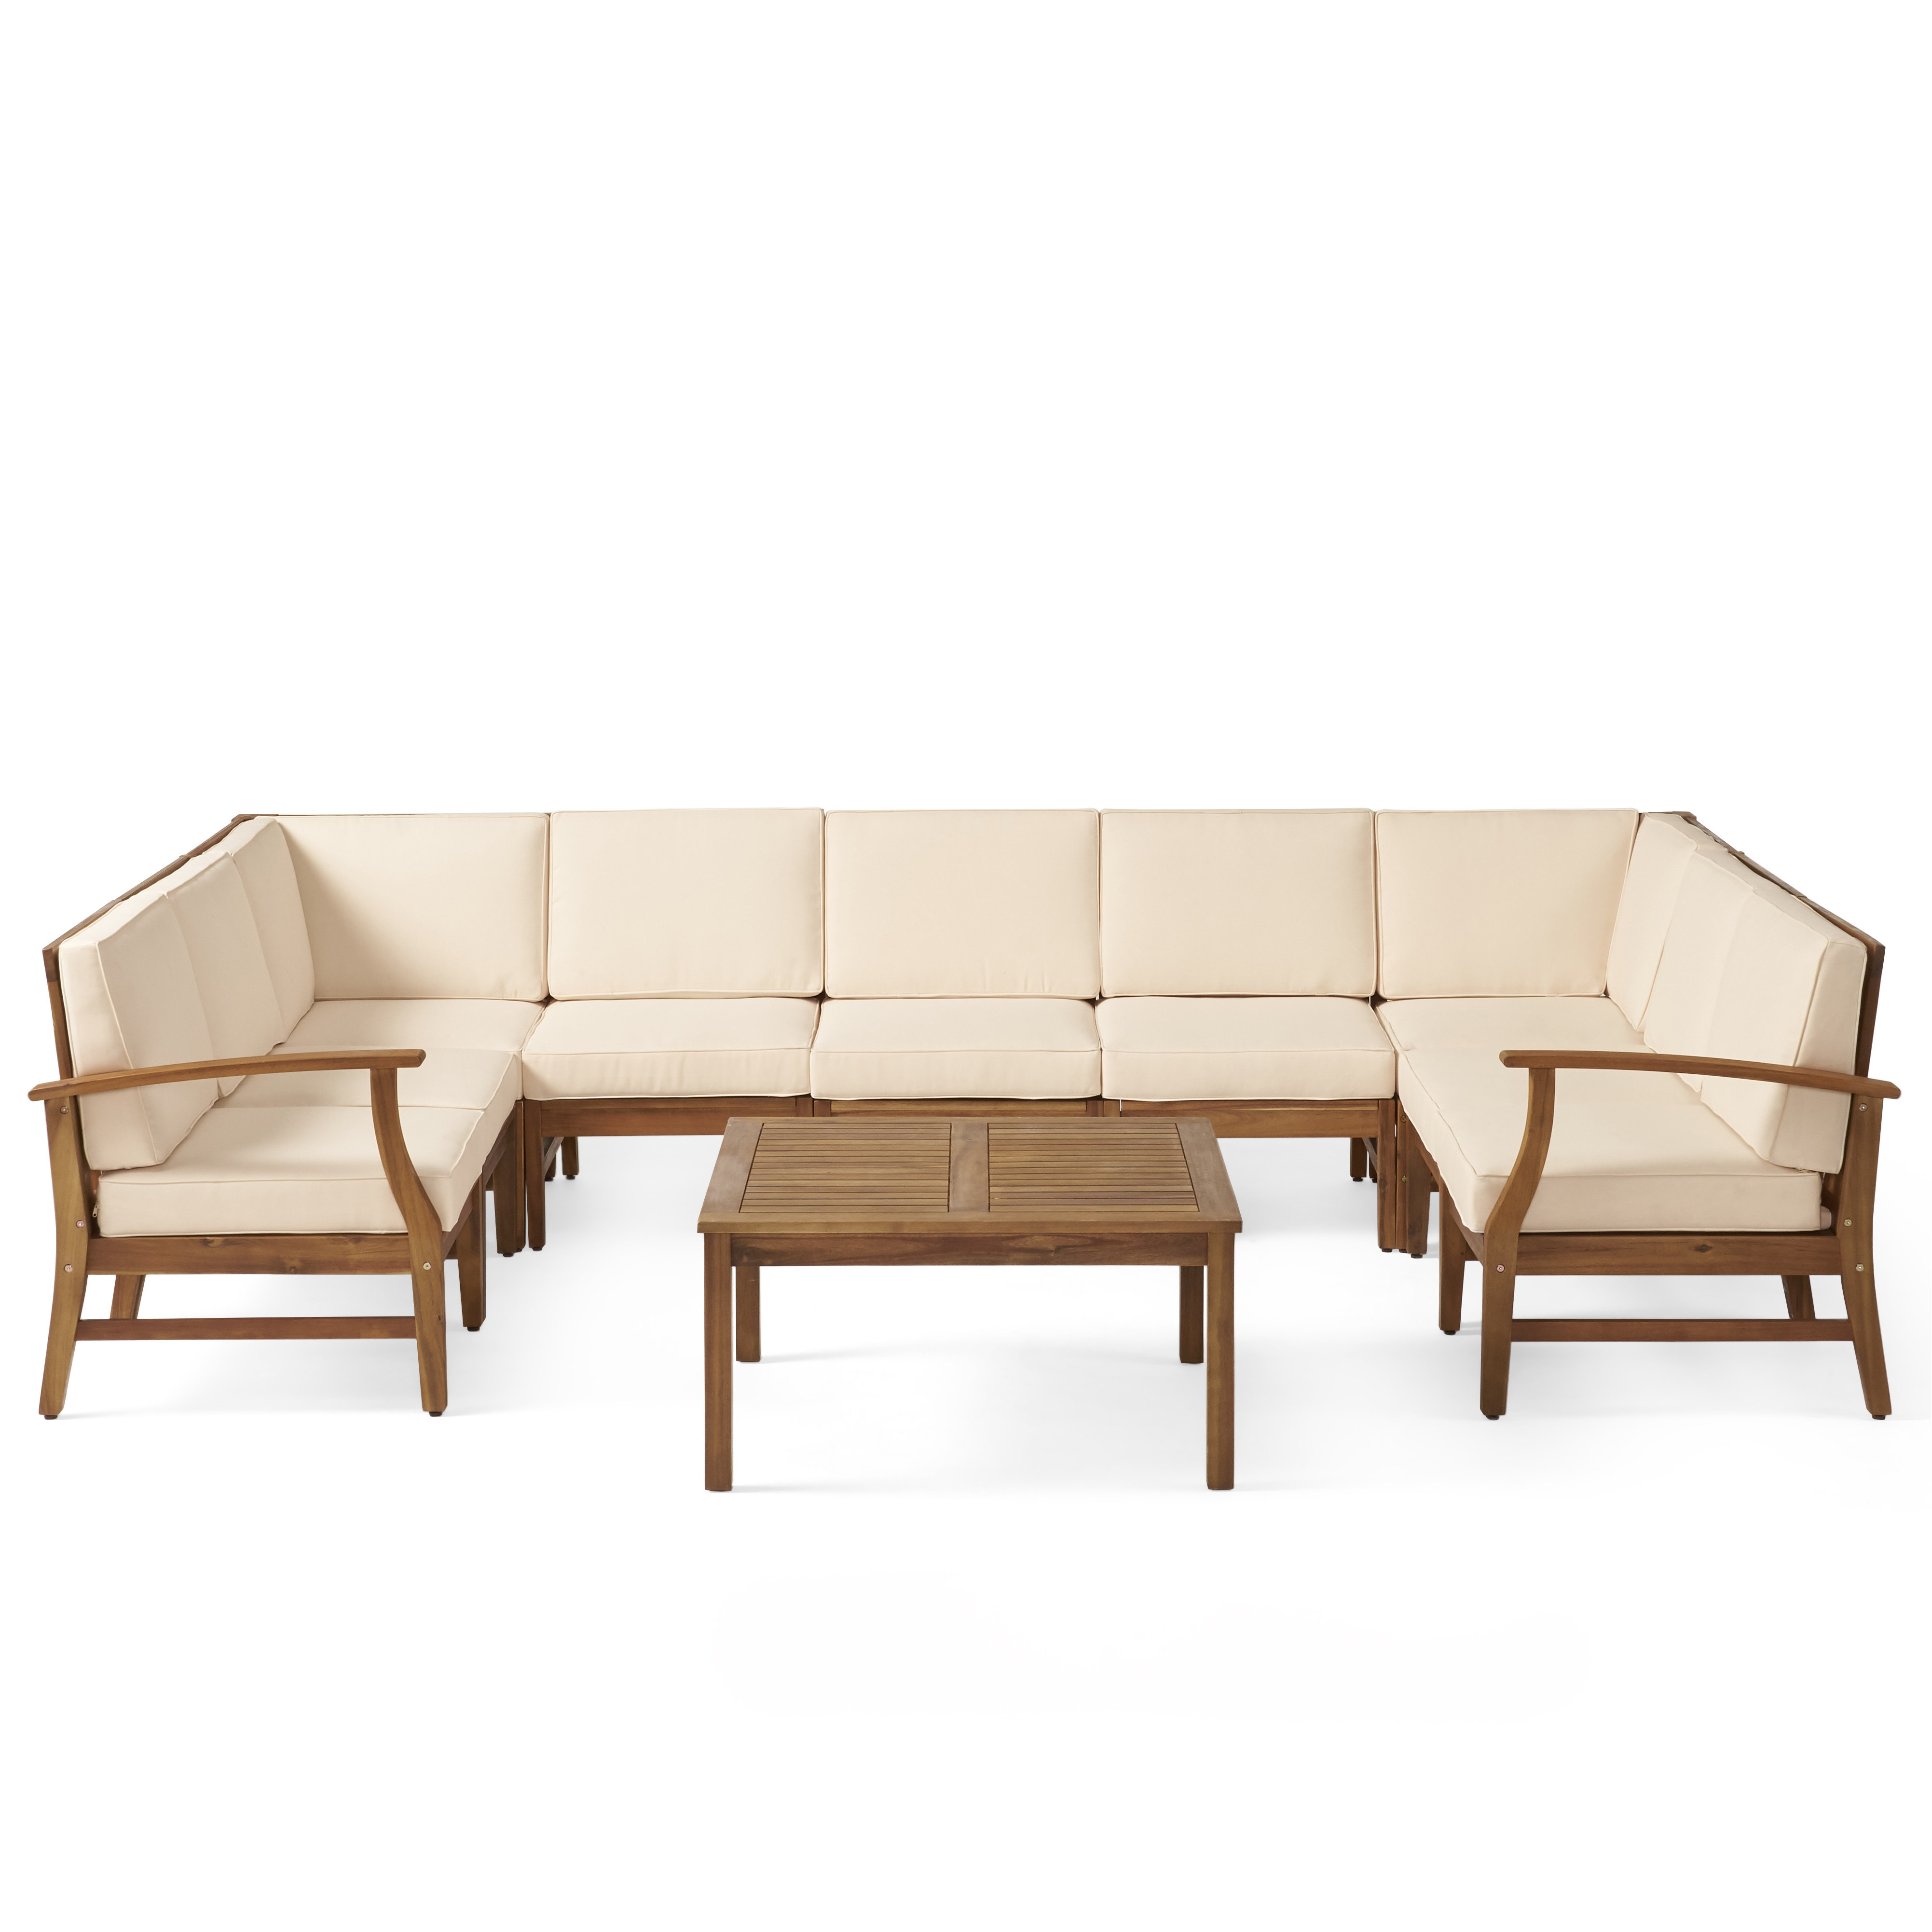 Judith Outdoor 9 Seater Acacia Wood Sectional Sofa Set With Cushions - Cream Cushion